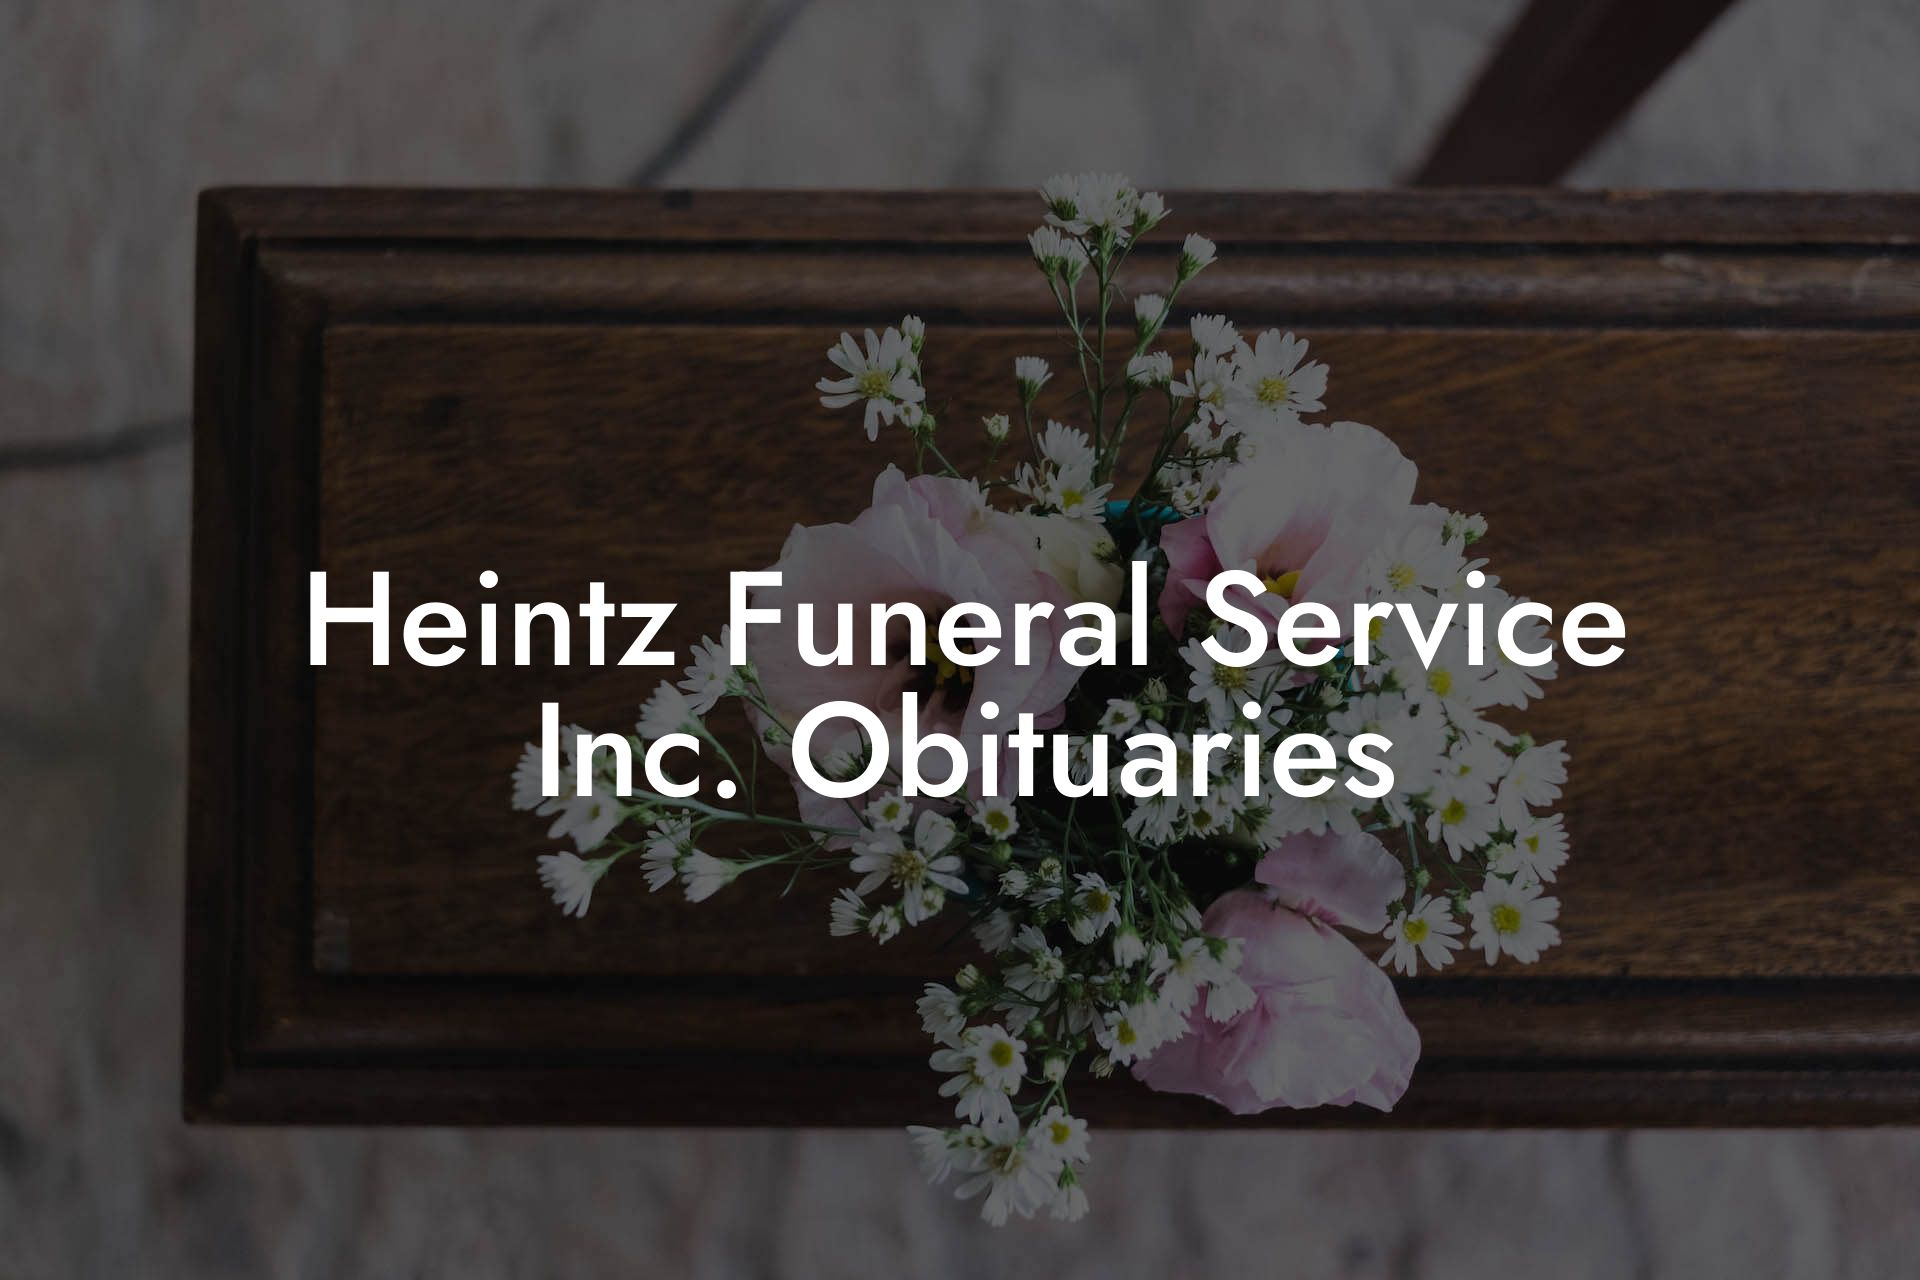 Heintz Funeral Service Inc. Obituaries